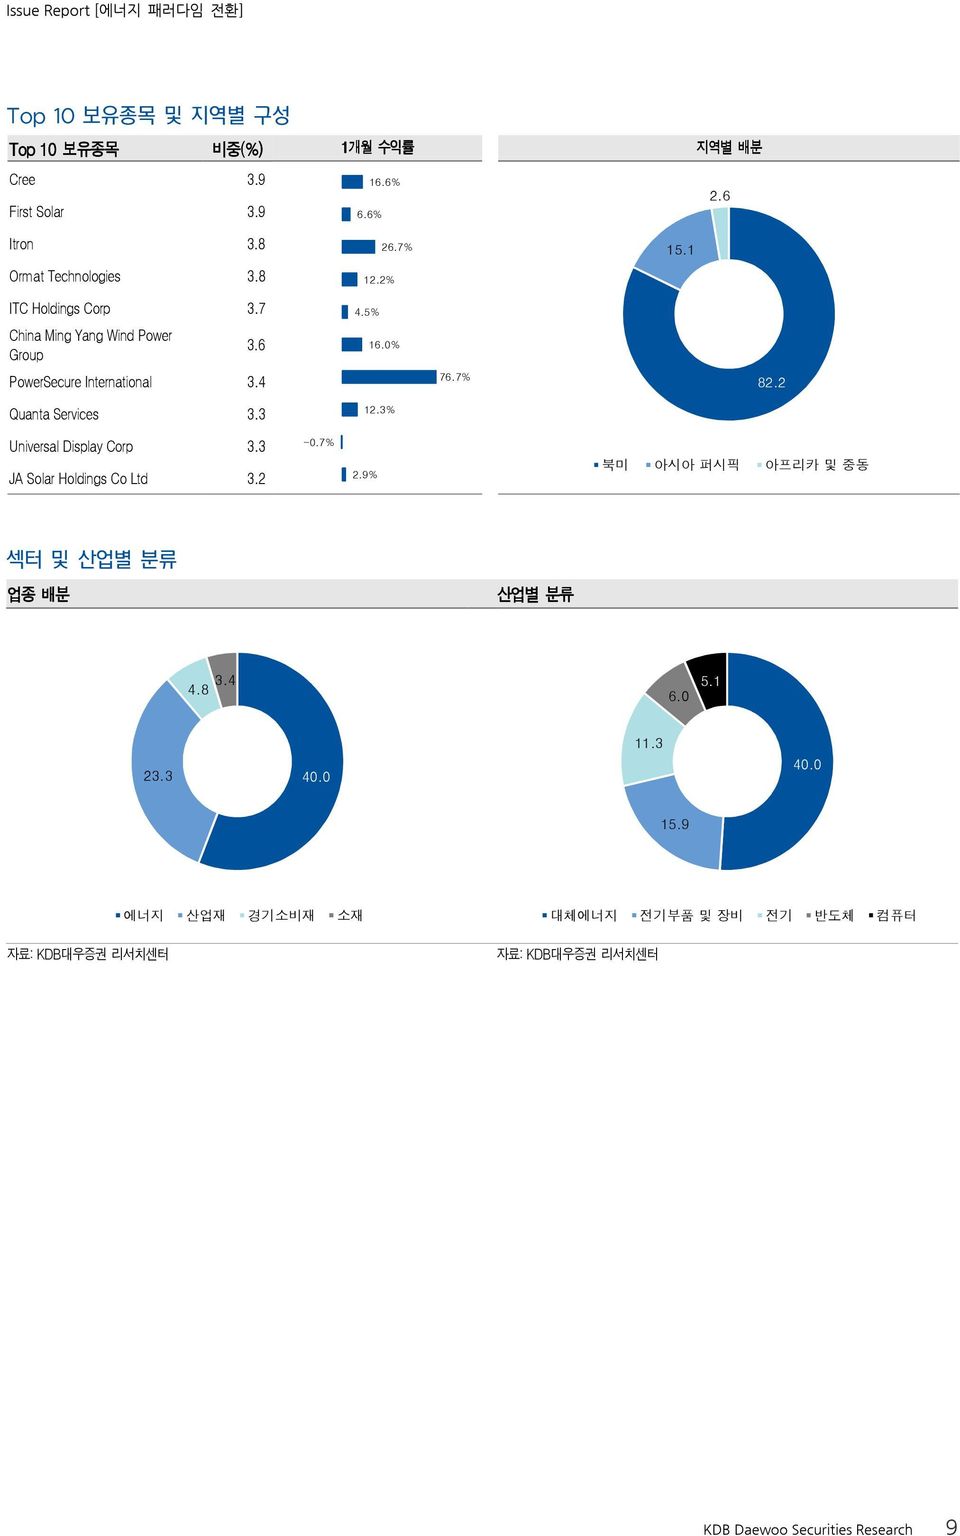 2 Quanta Services 3.3 12.3% Universal Display Corp 3.3 JA Solar Holdings Co Ltd 3.2-0.7% 2.